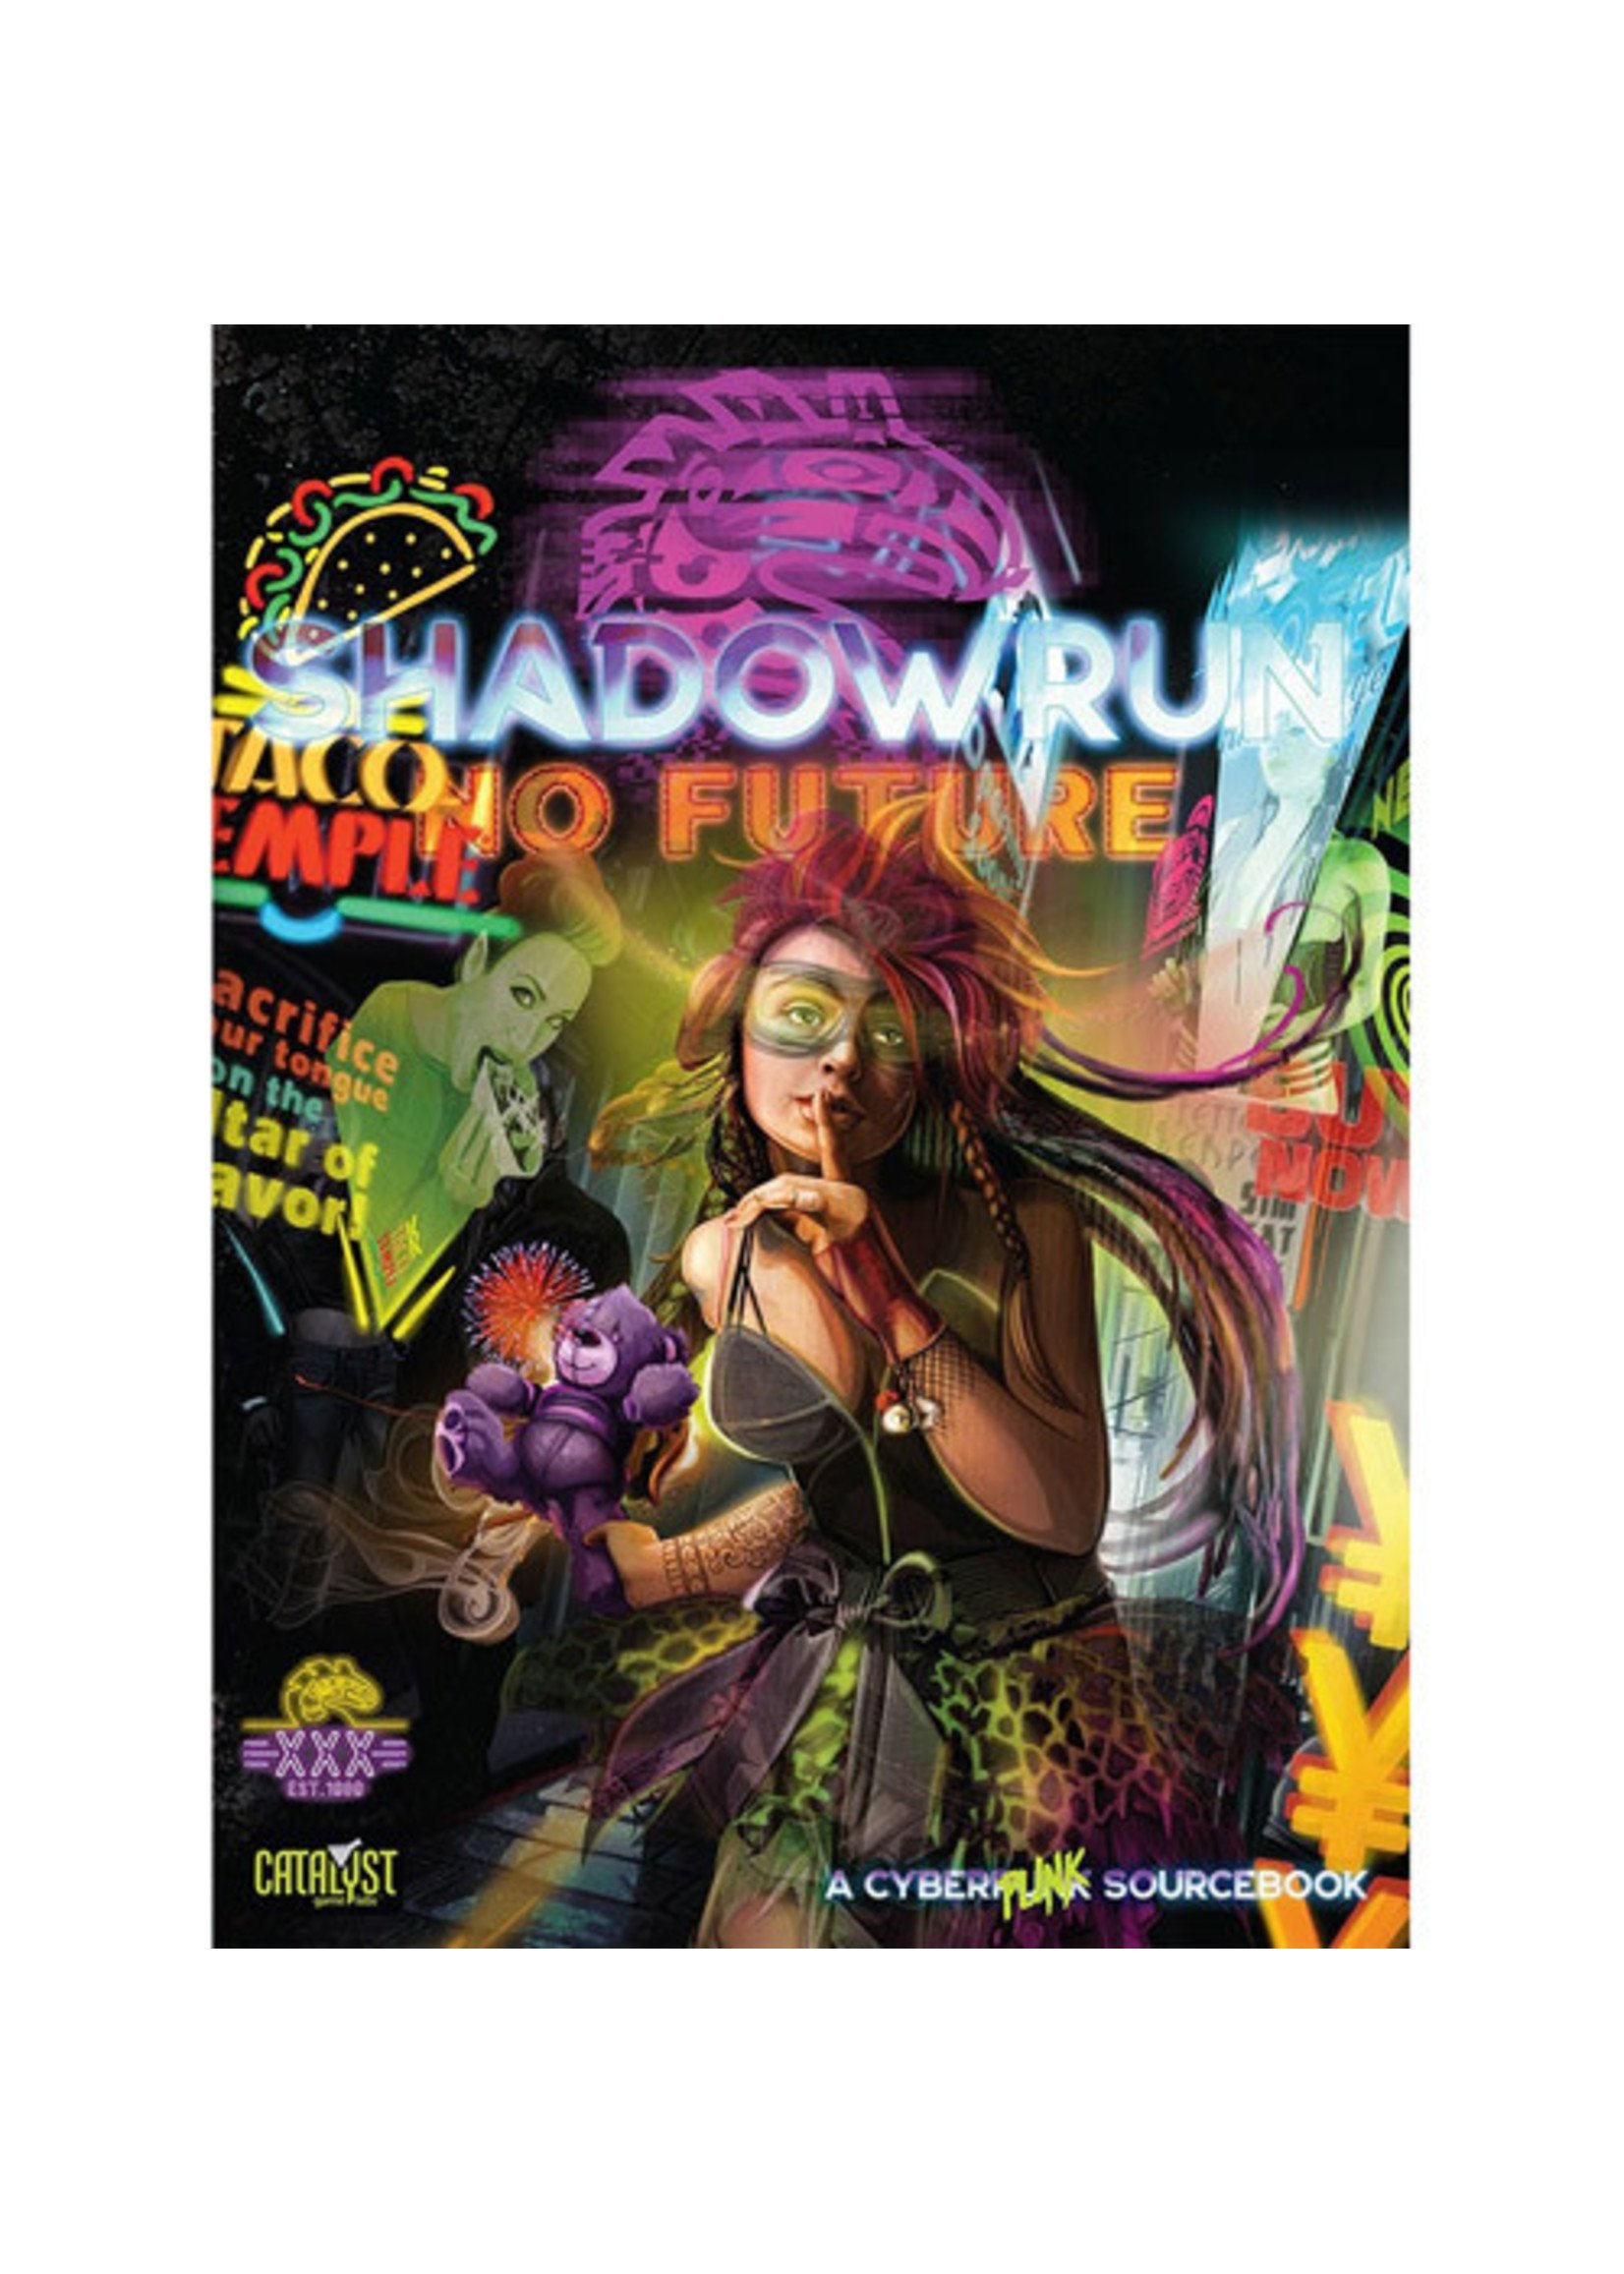 Shadowrun 6 - Streetpédia - Black Book Editions, Shadowrun 6